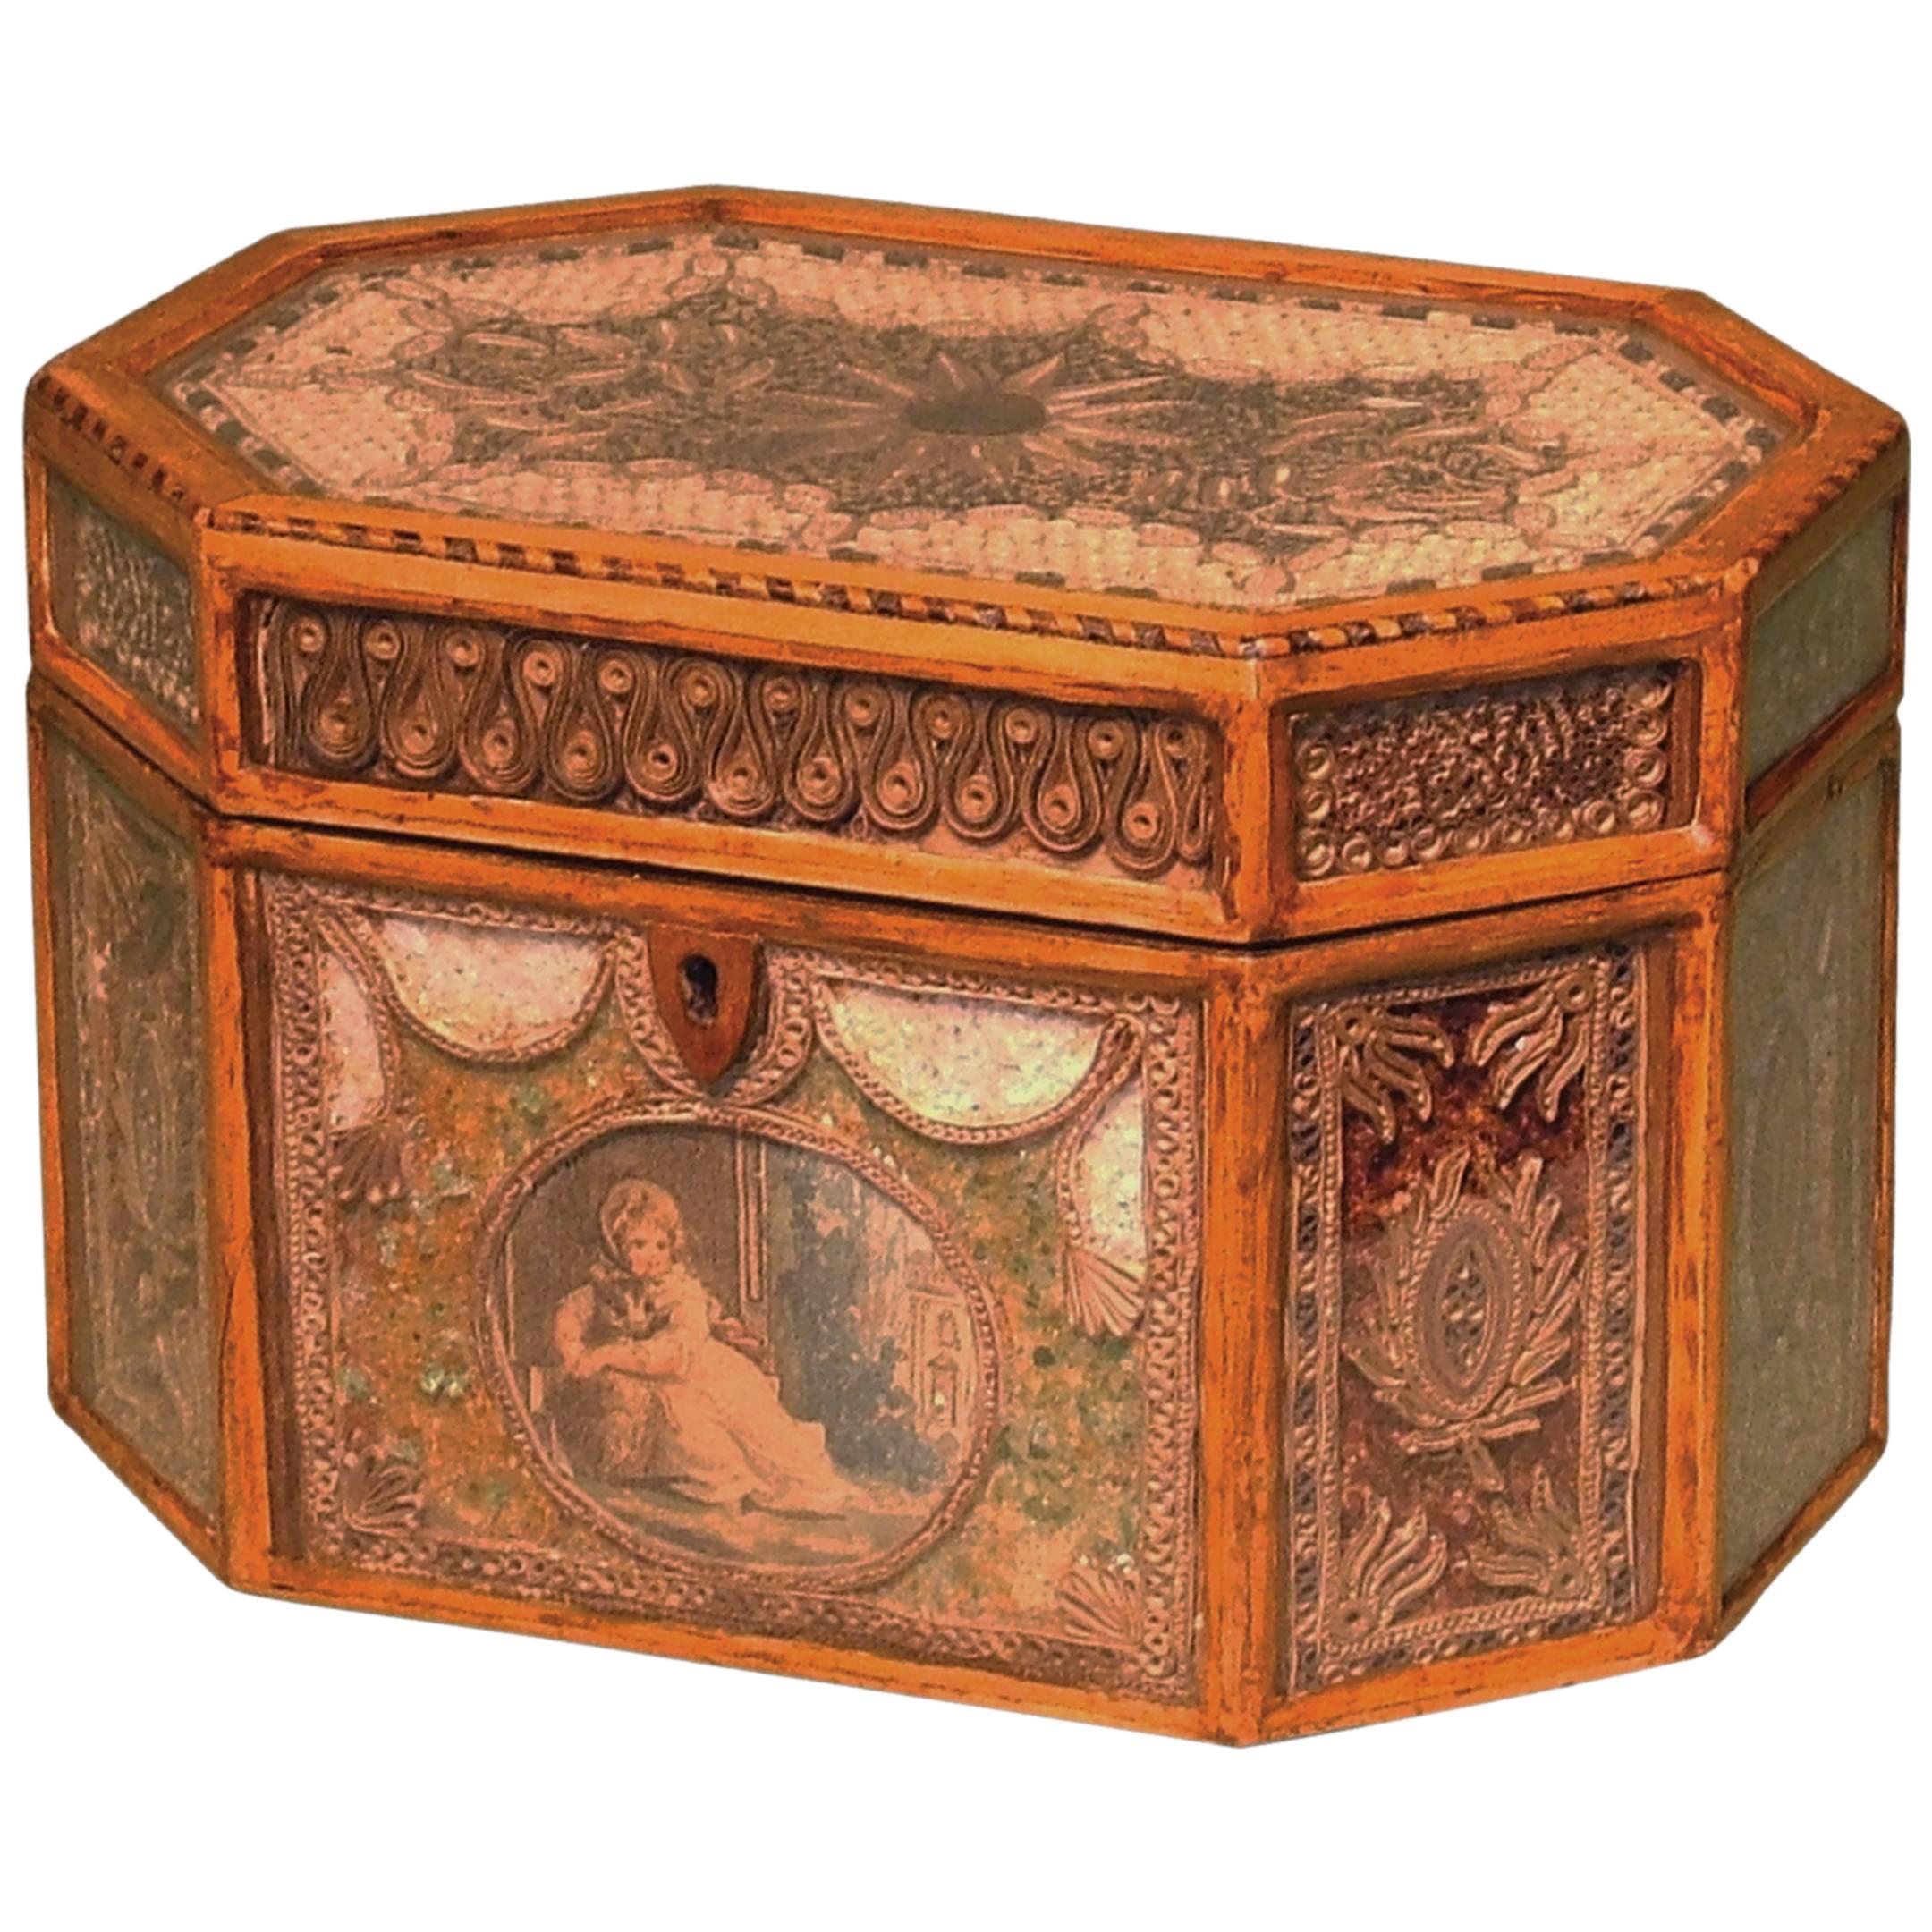 George III Period Octagonal Shaped Scrollwork Tea Caddy